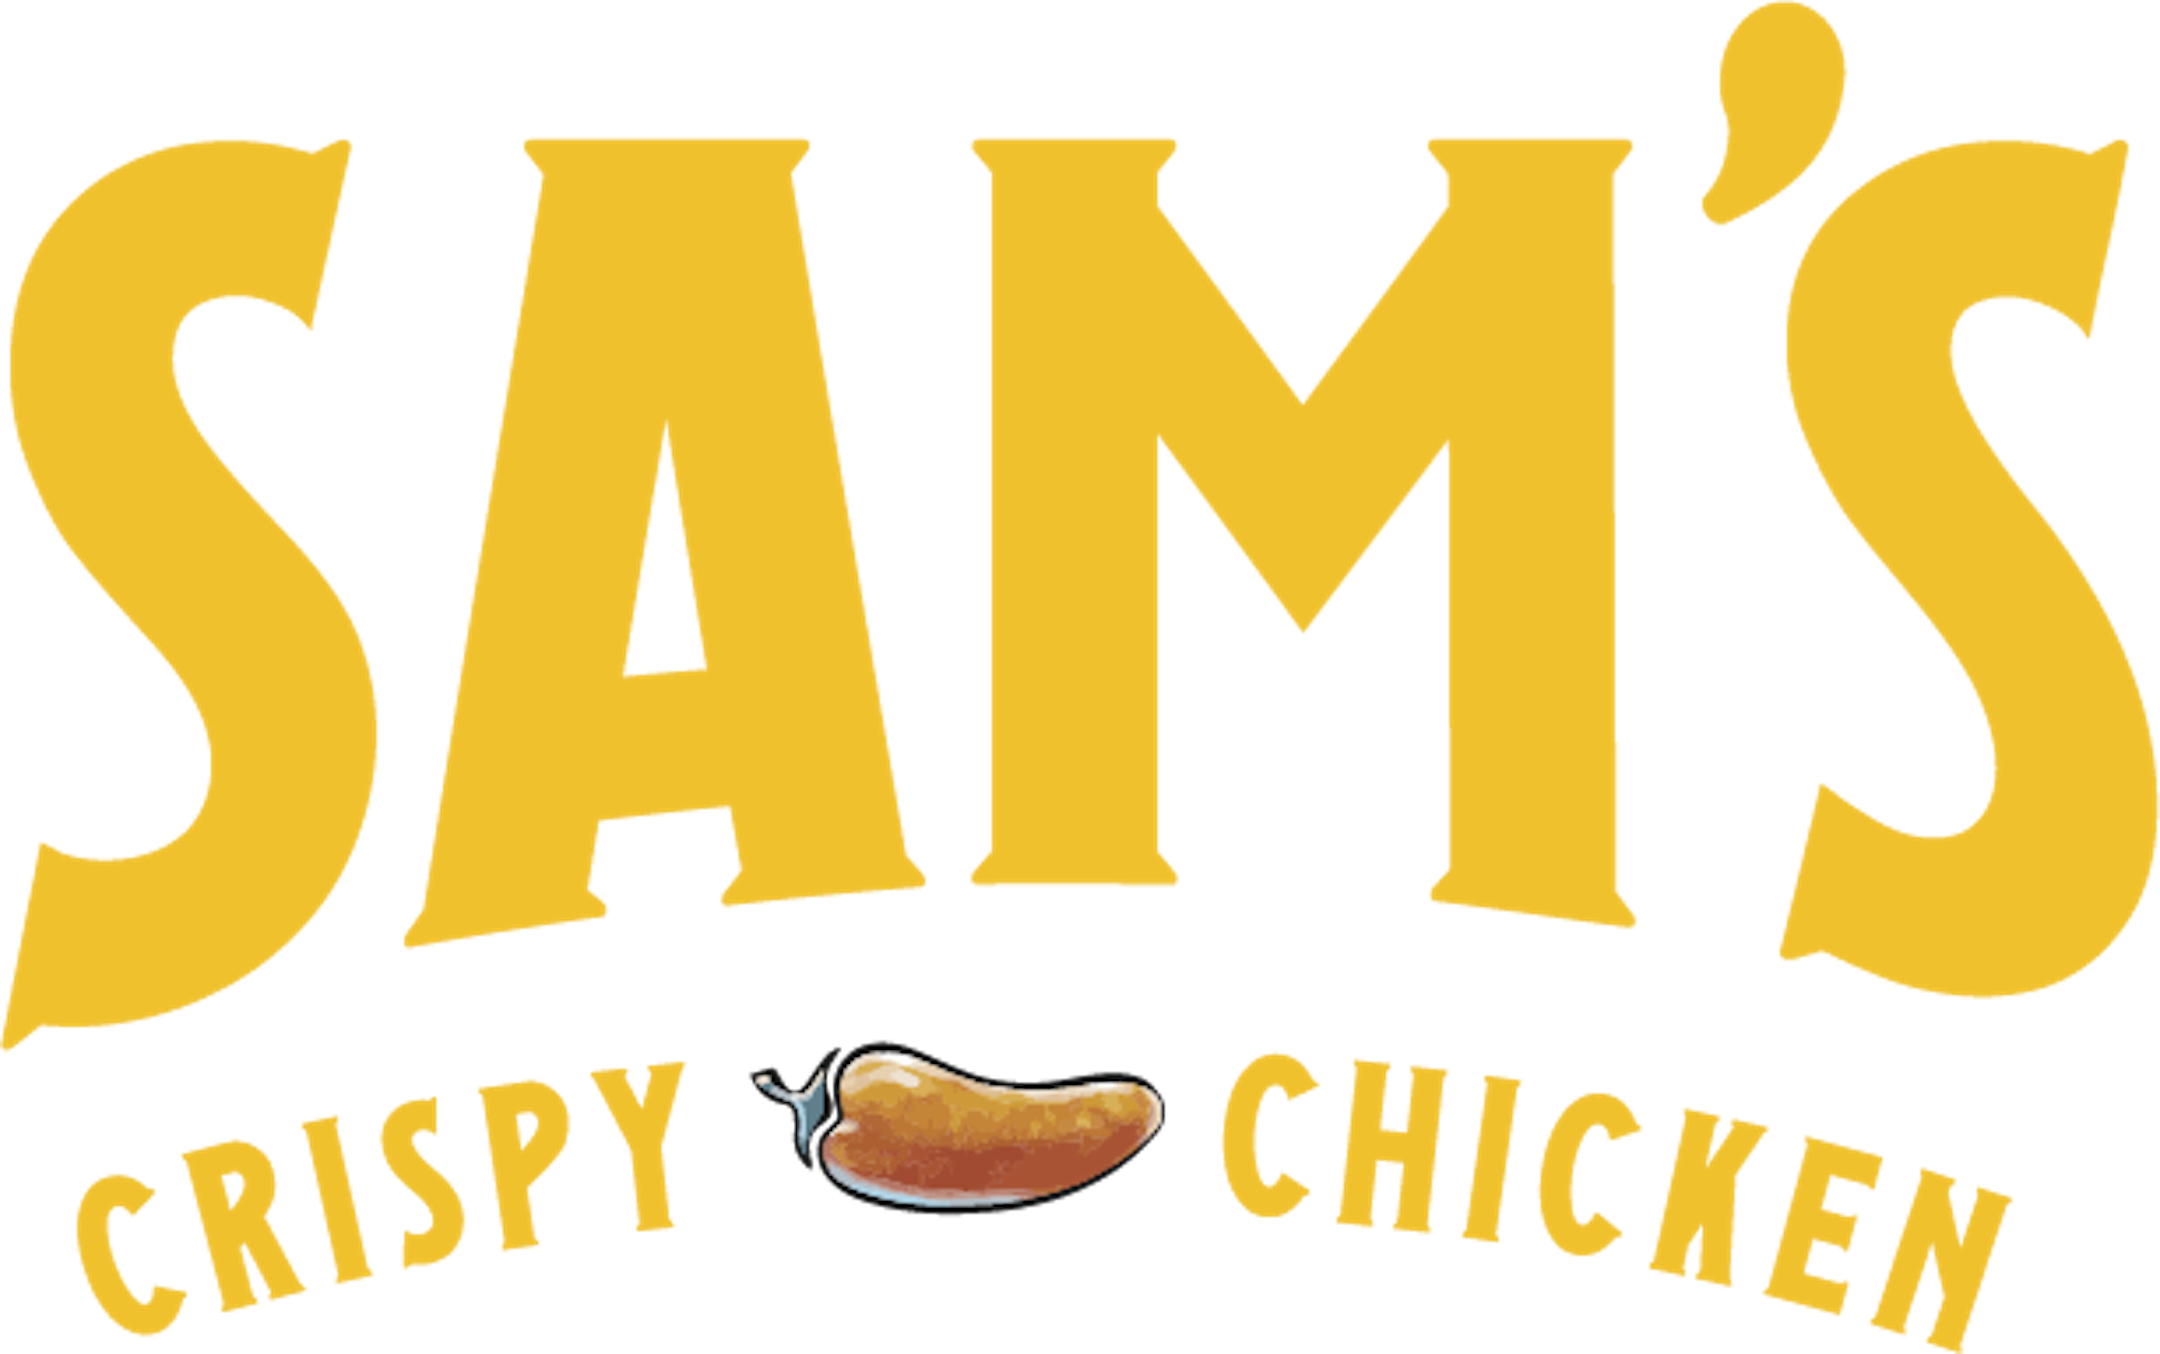 Sam's Crispy Chicken